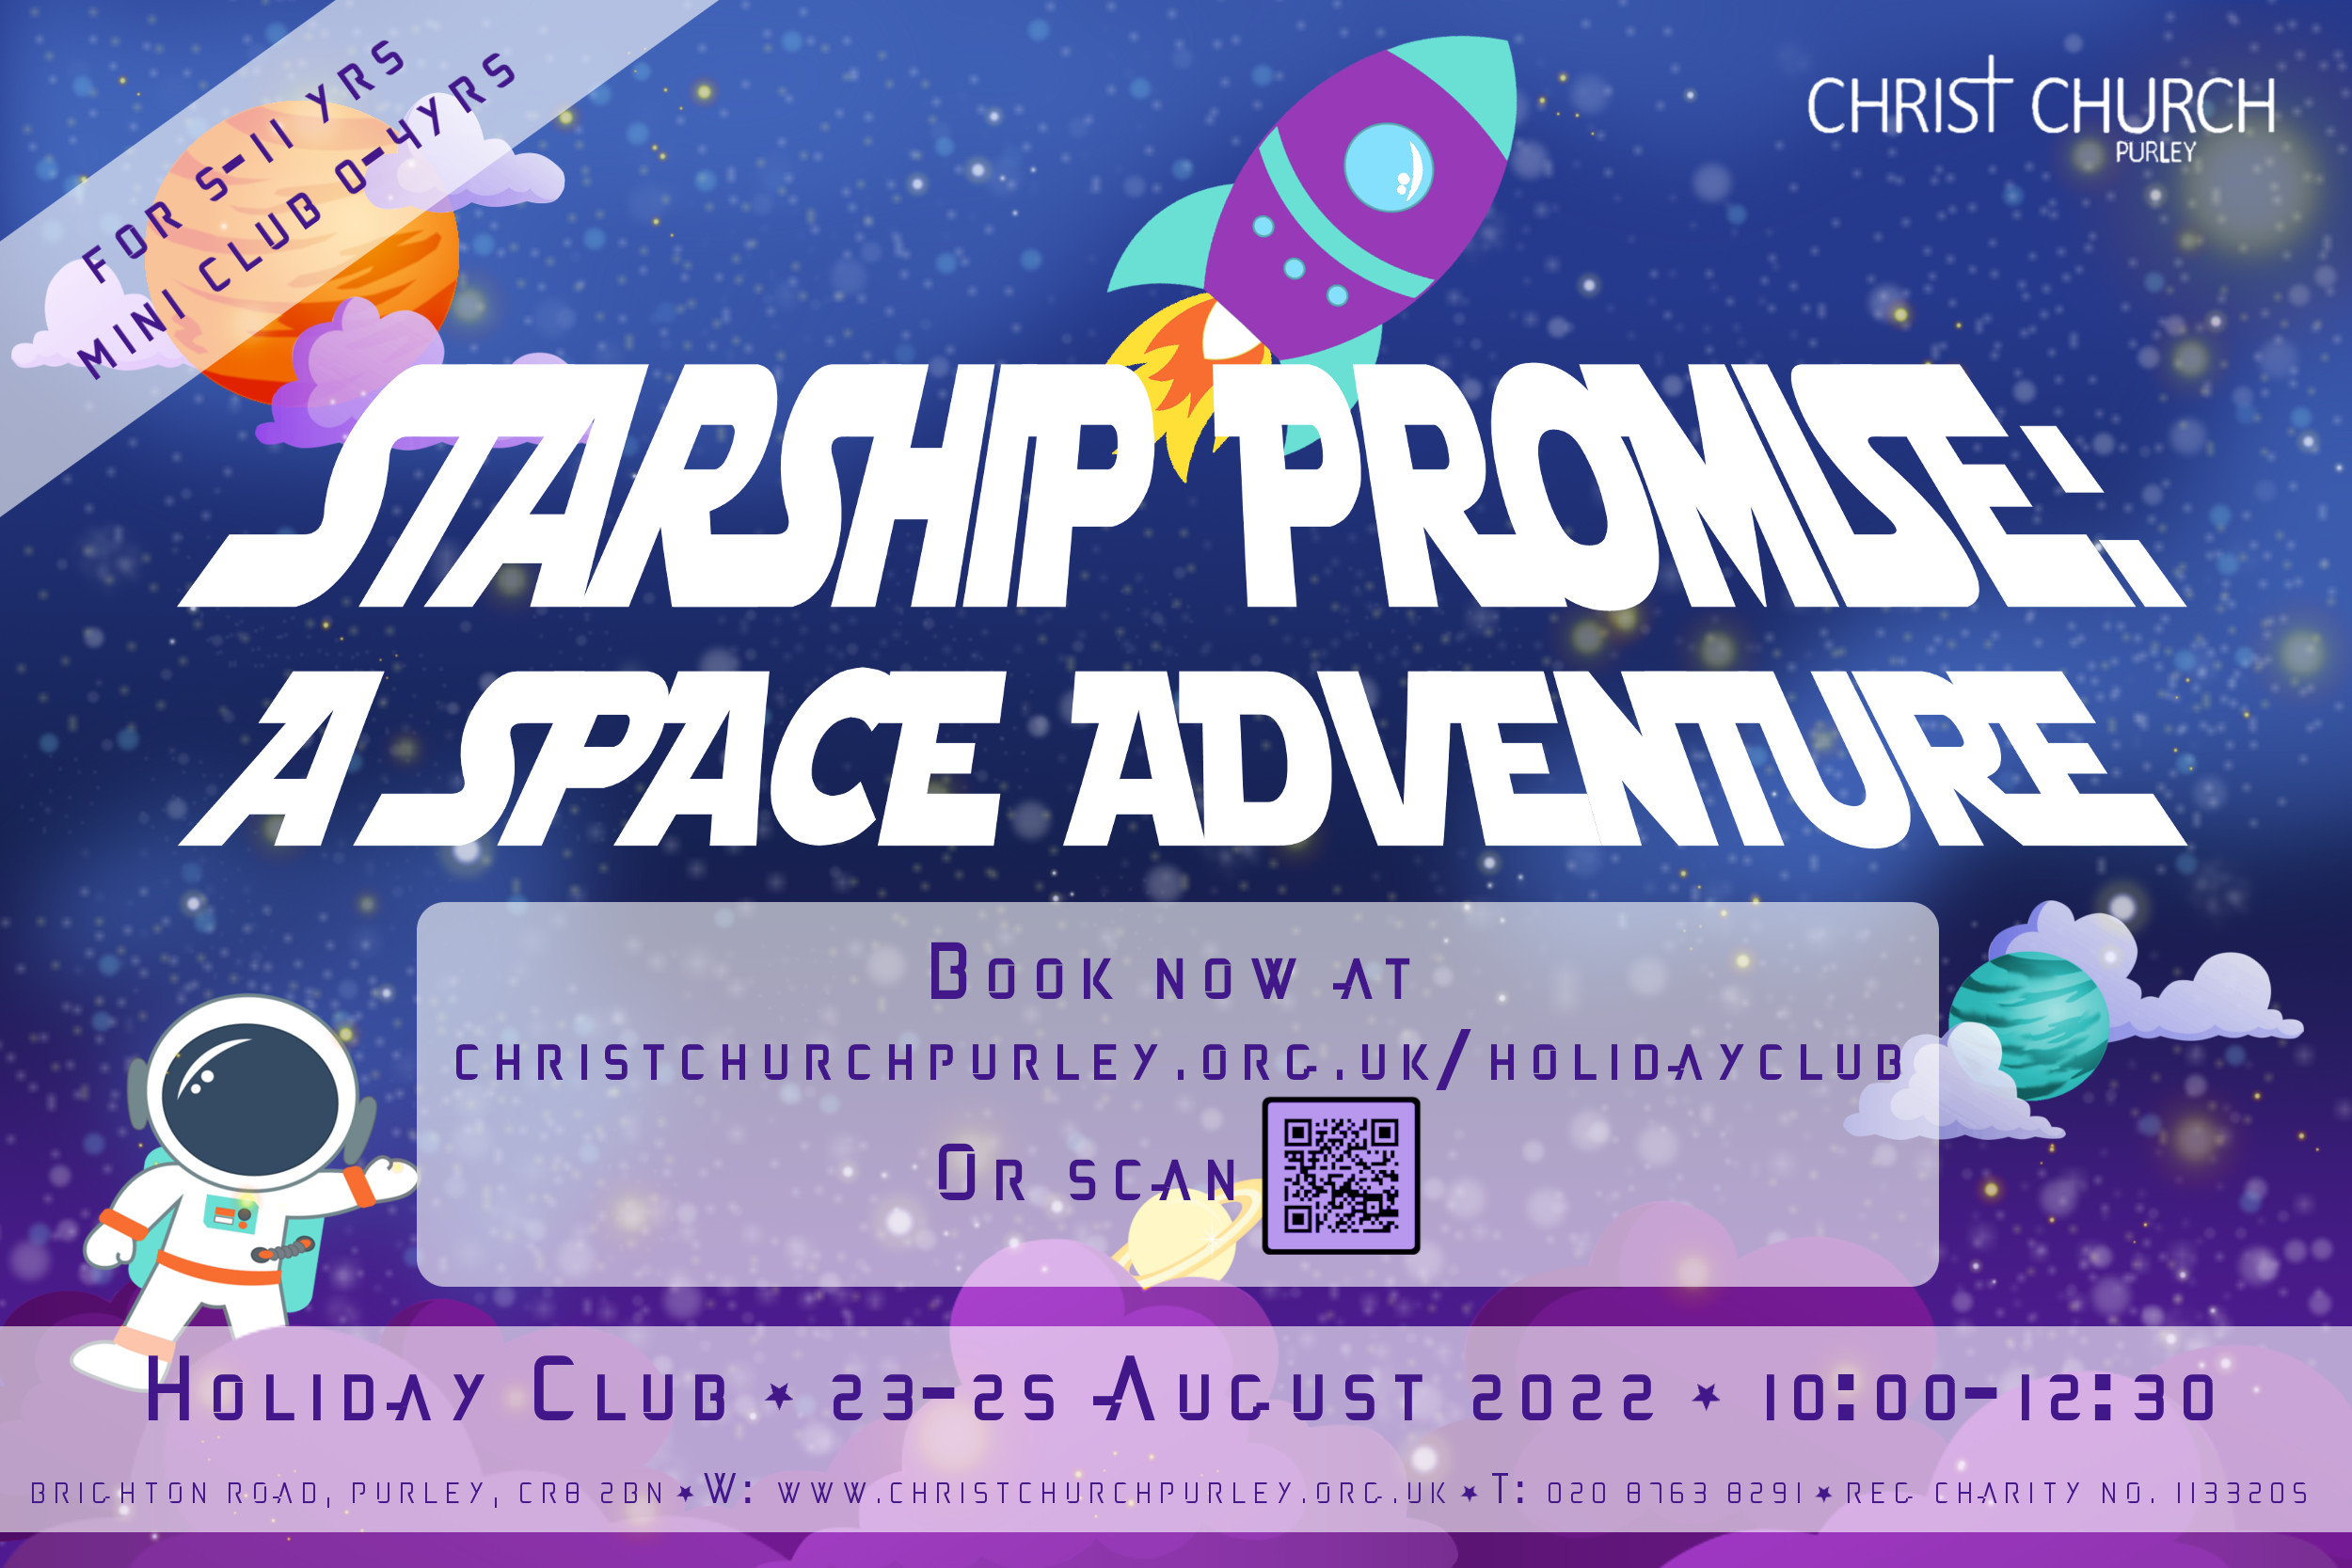 Starship Promise booking publi